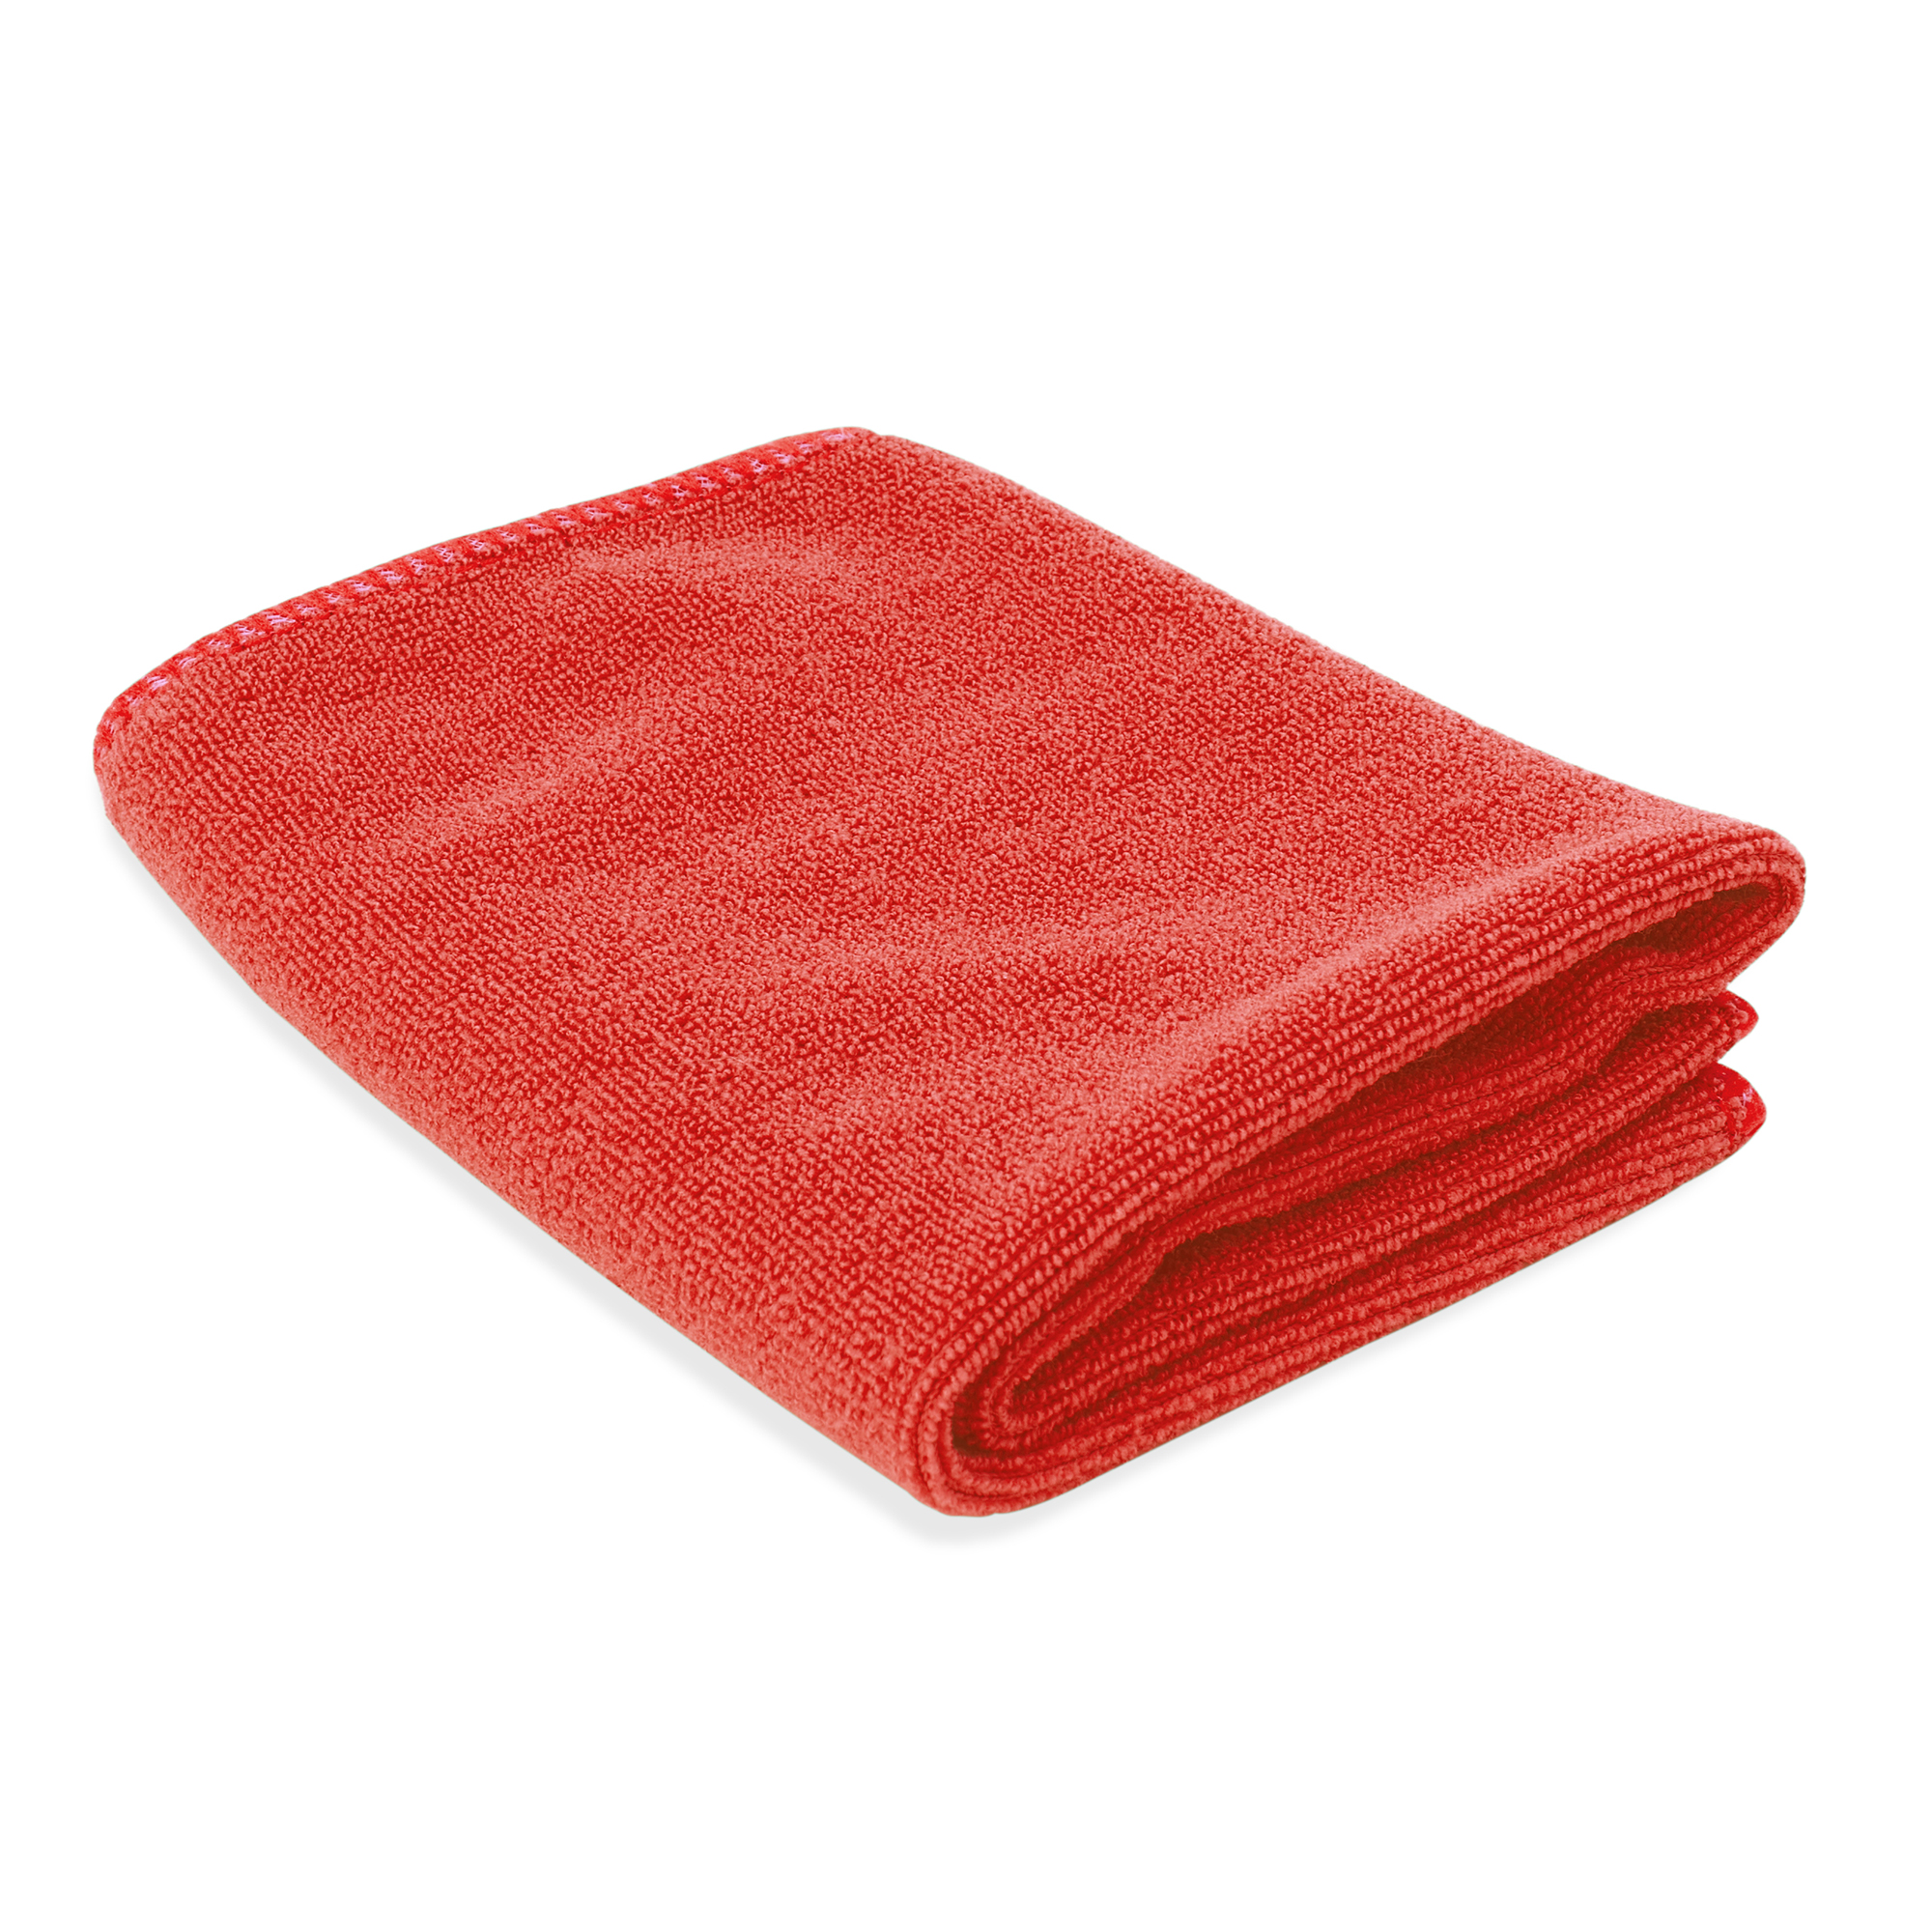 1098-sporty-lara-asciugamano-rosso.jpg